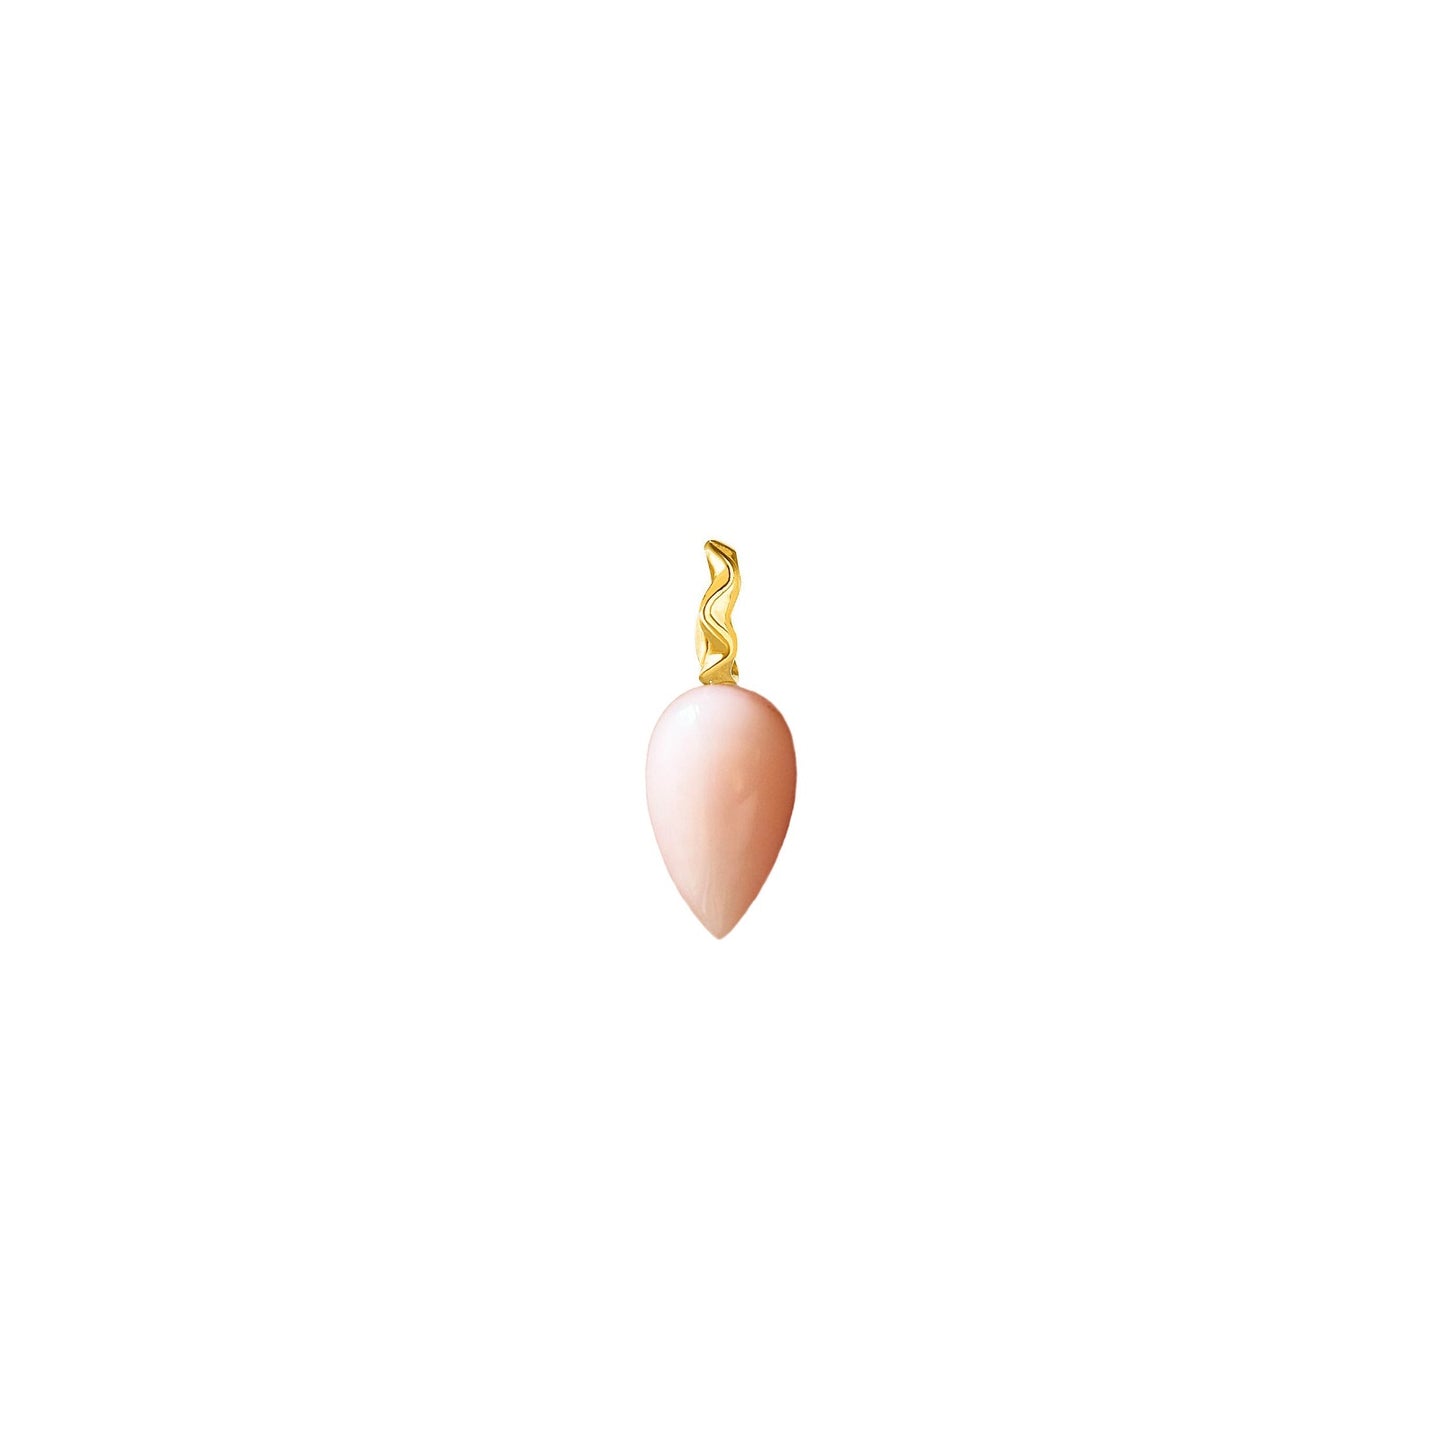 Peruvian pink opal acorn drop charm with 14k gold bail.